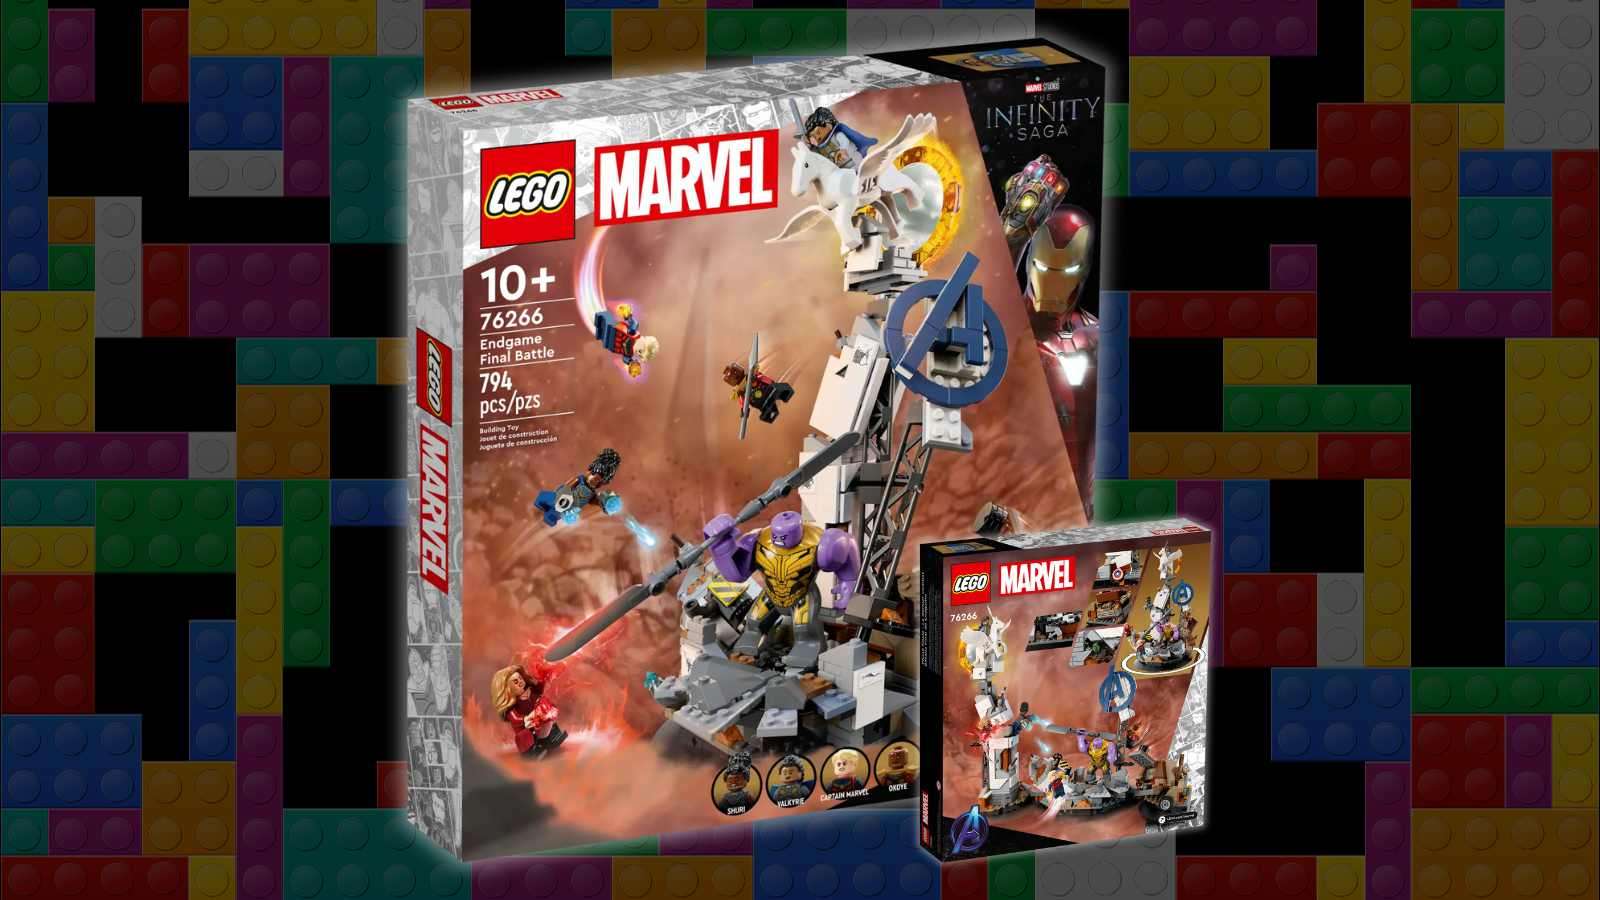 LEGO Marvel Endgame Final Battle set on LEGO background.